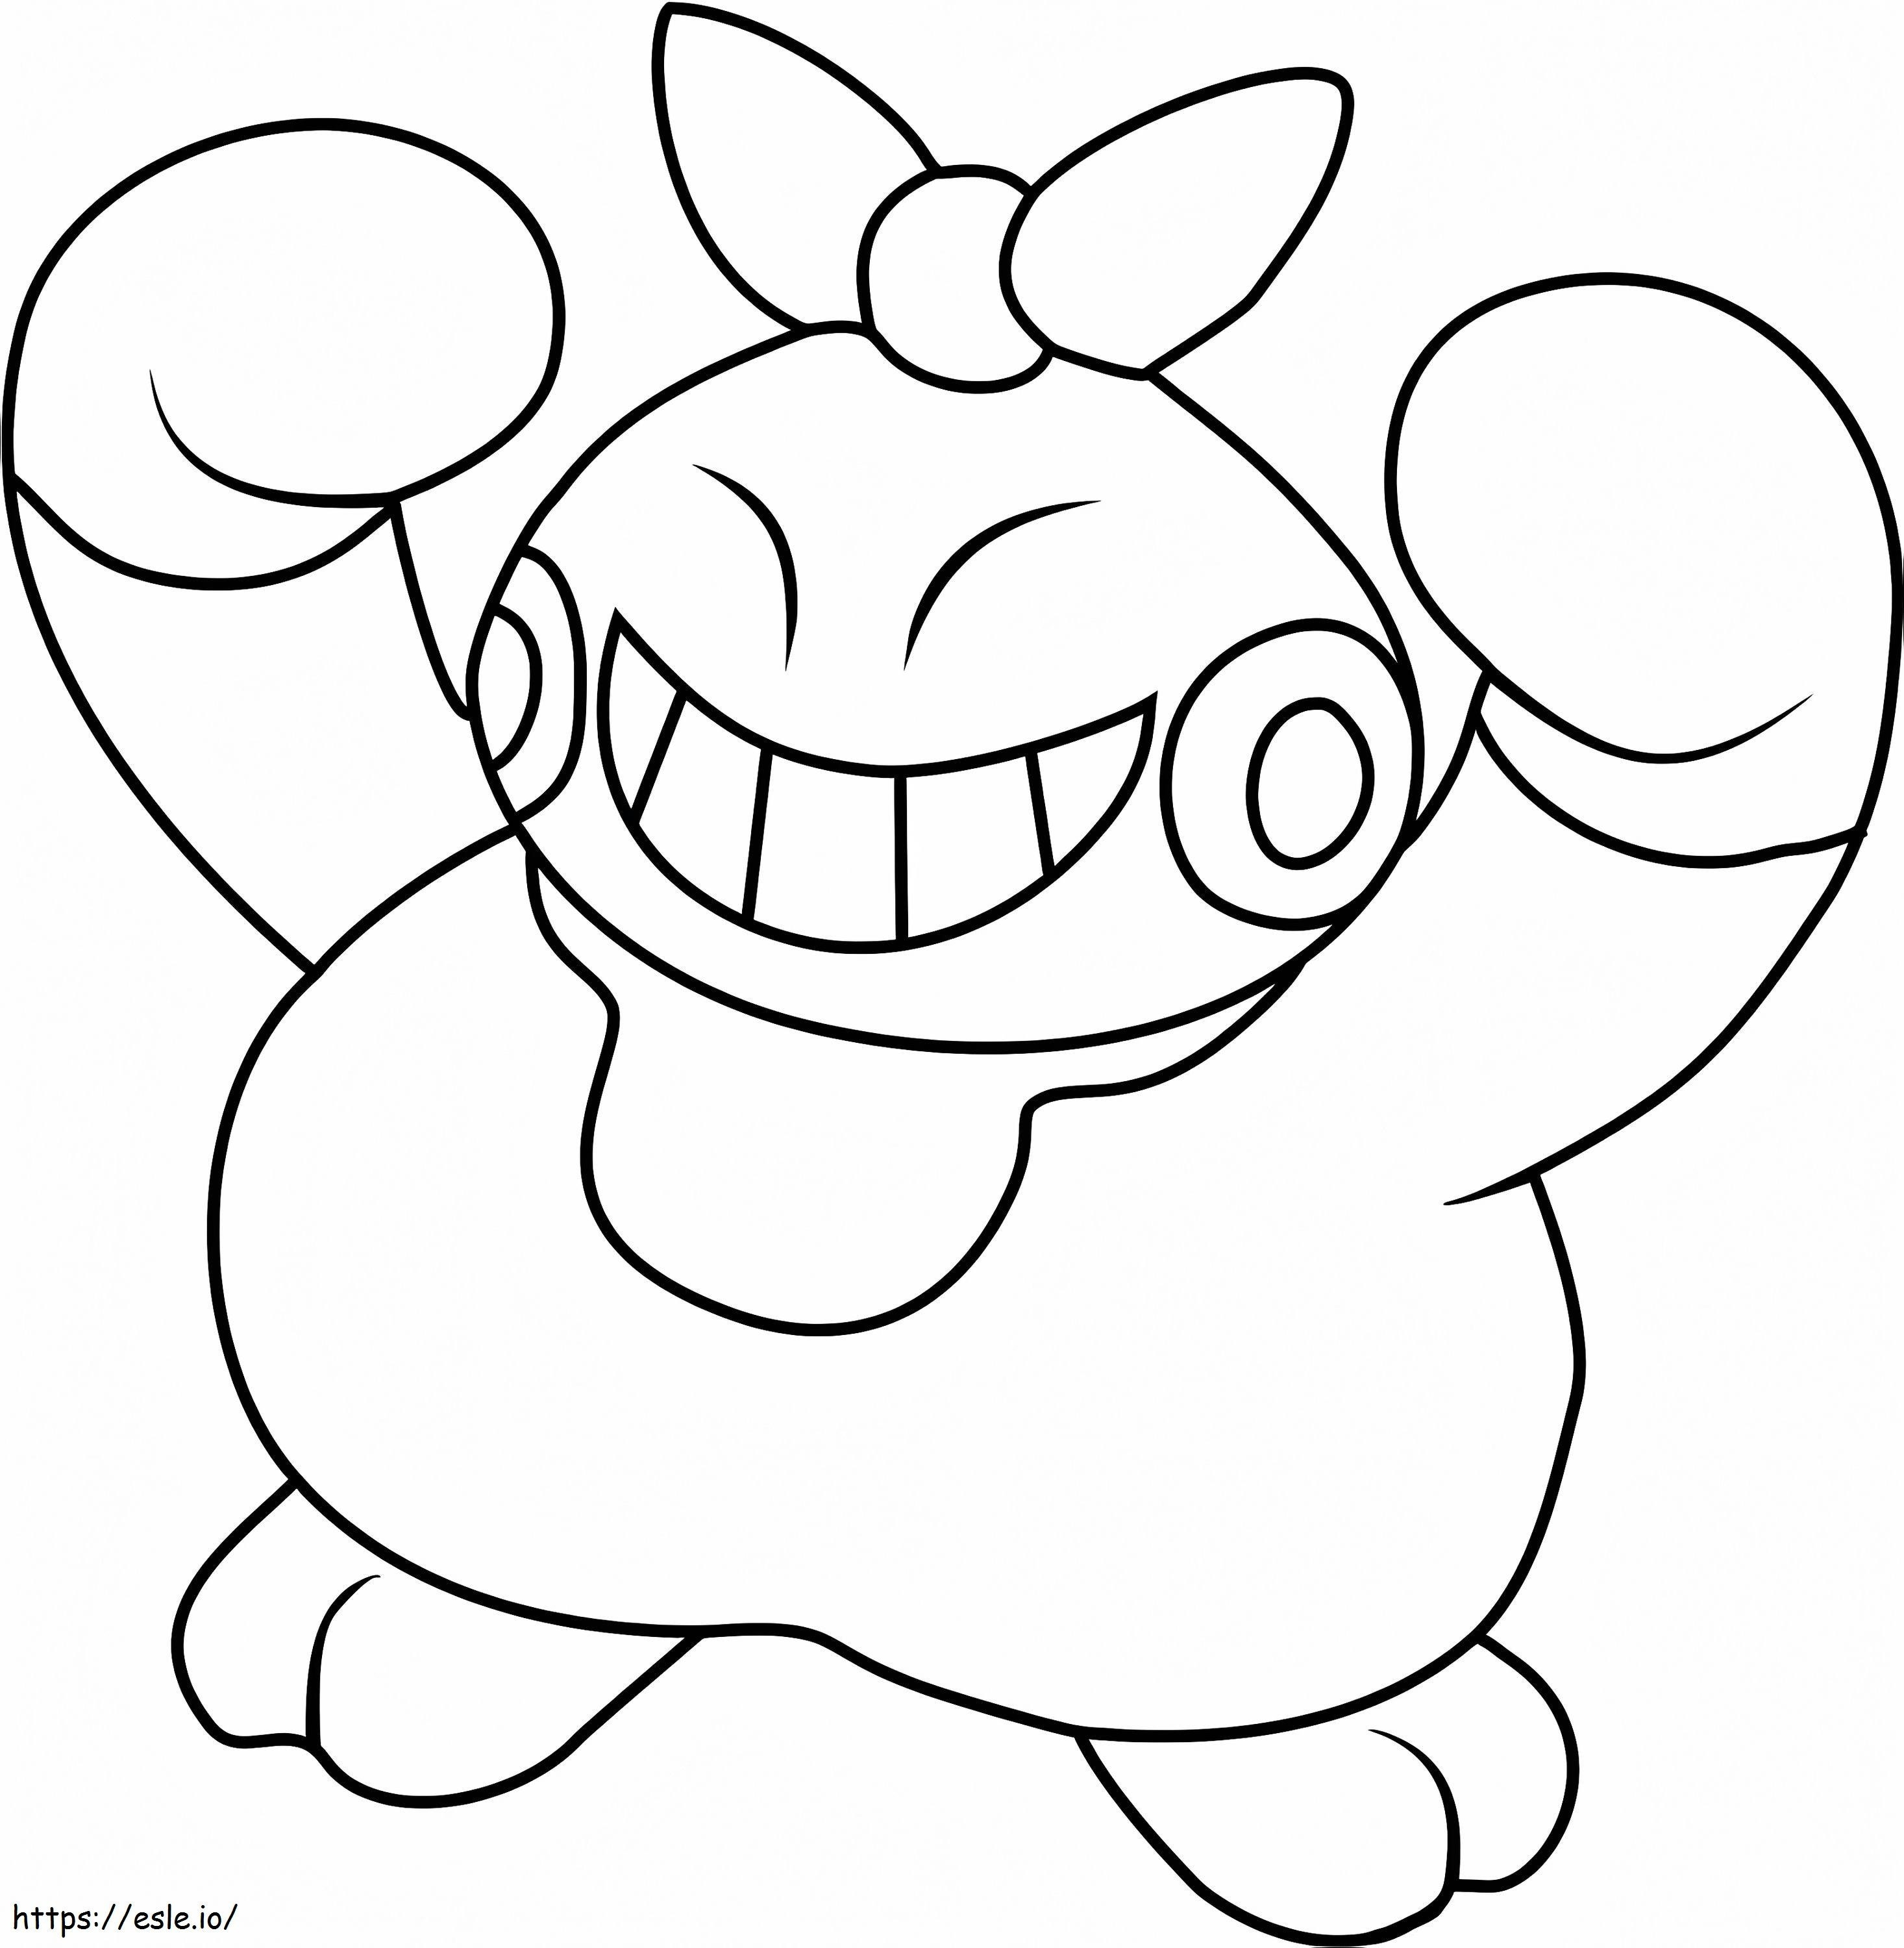 Coloriage Attrape Pokémon à imprimer dessin